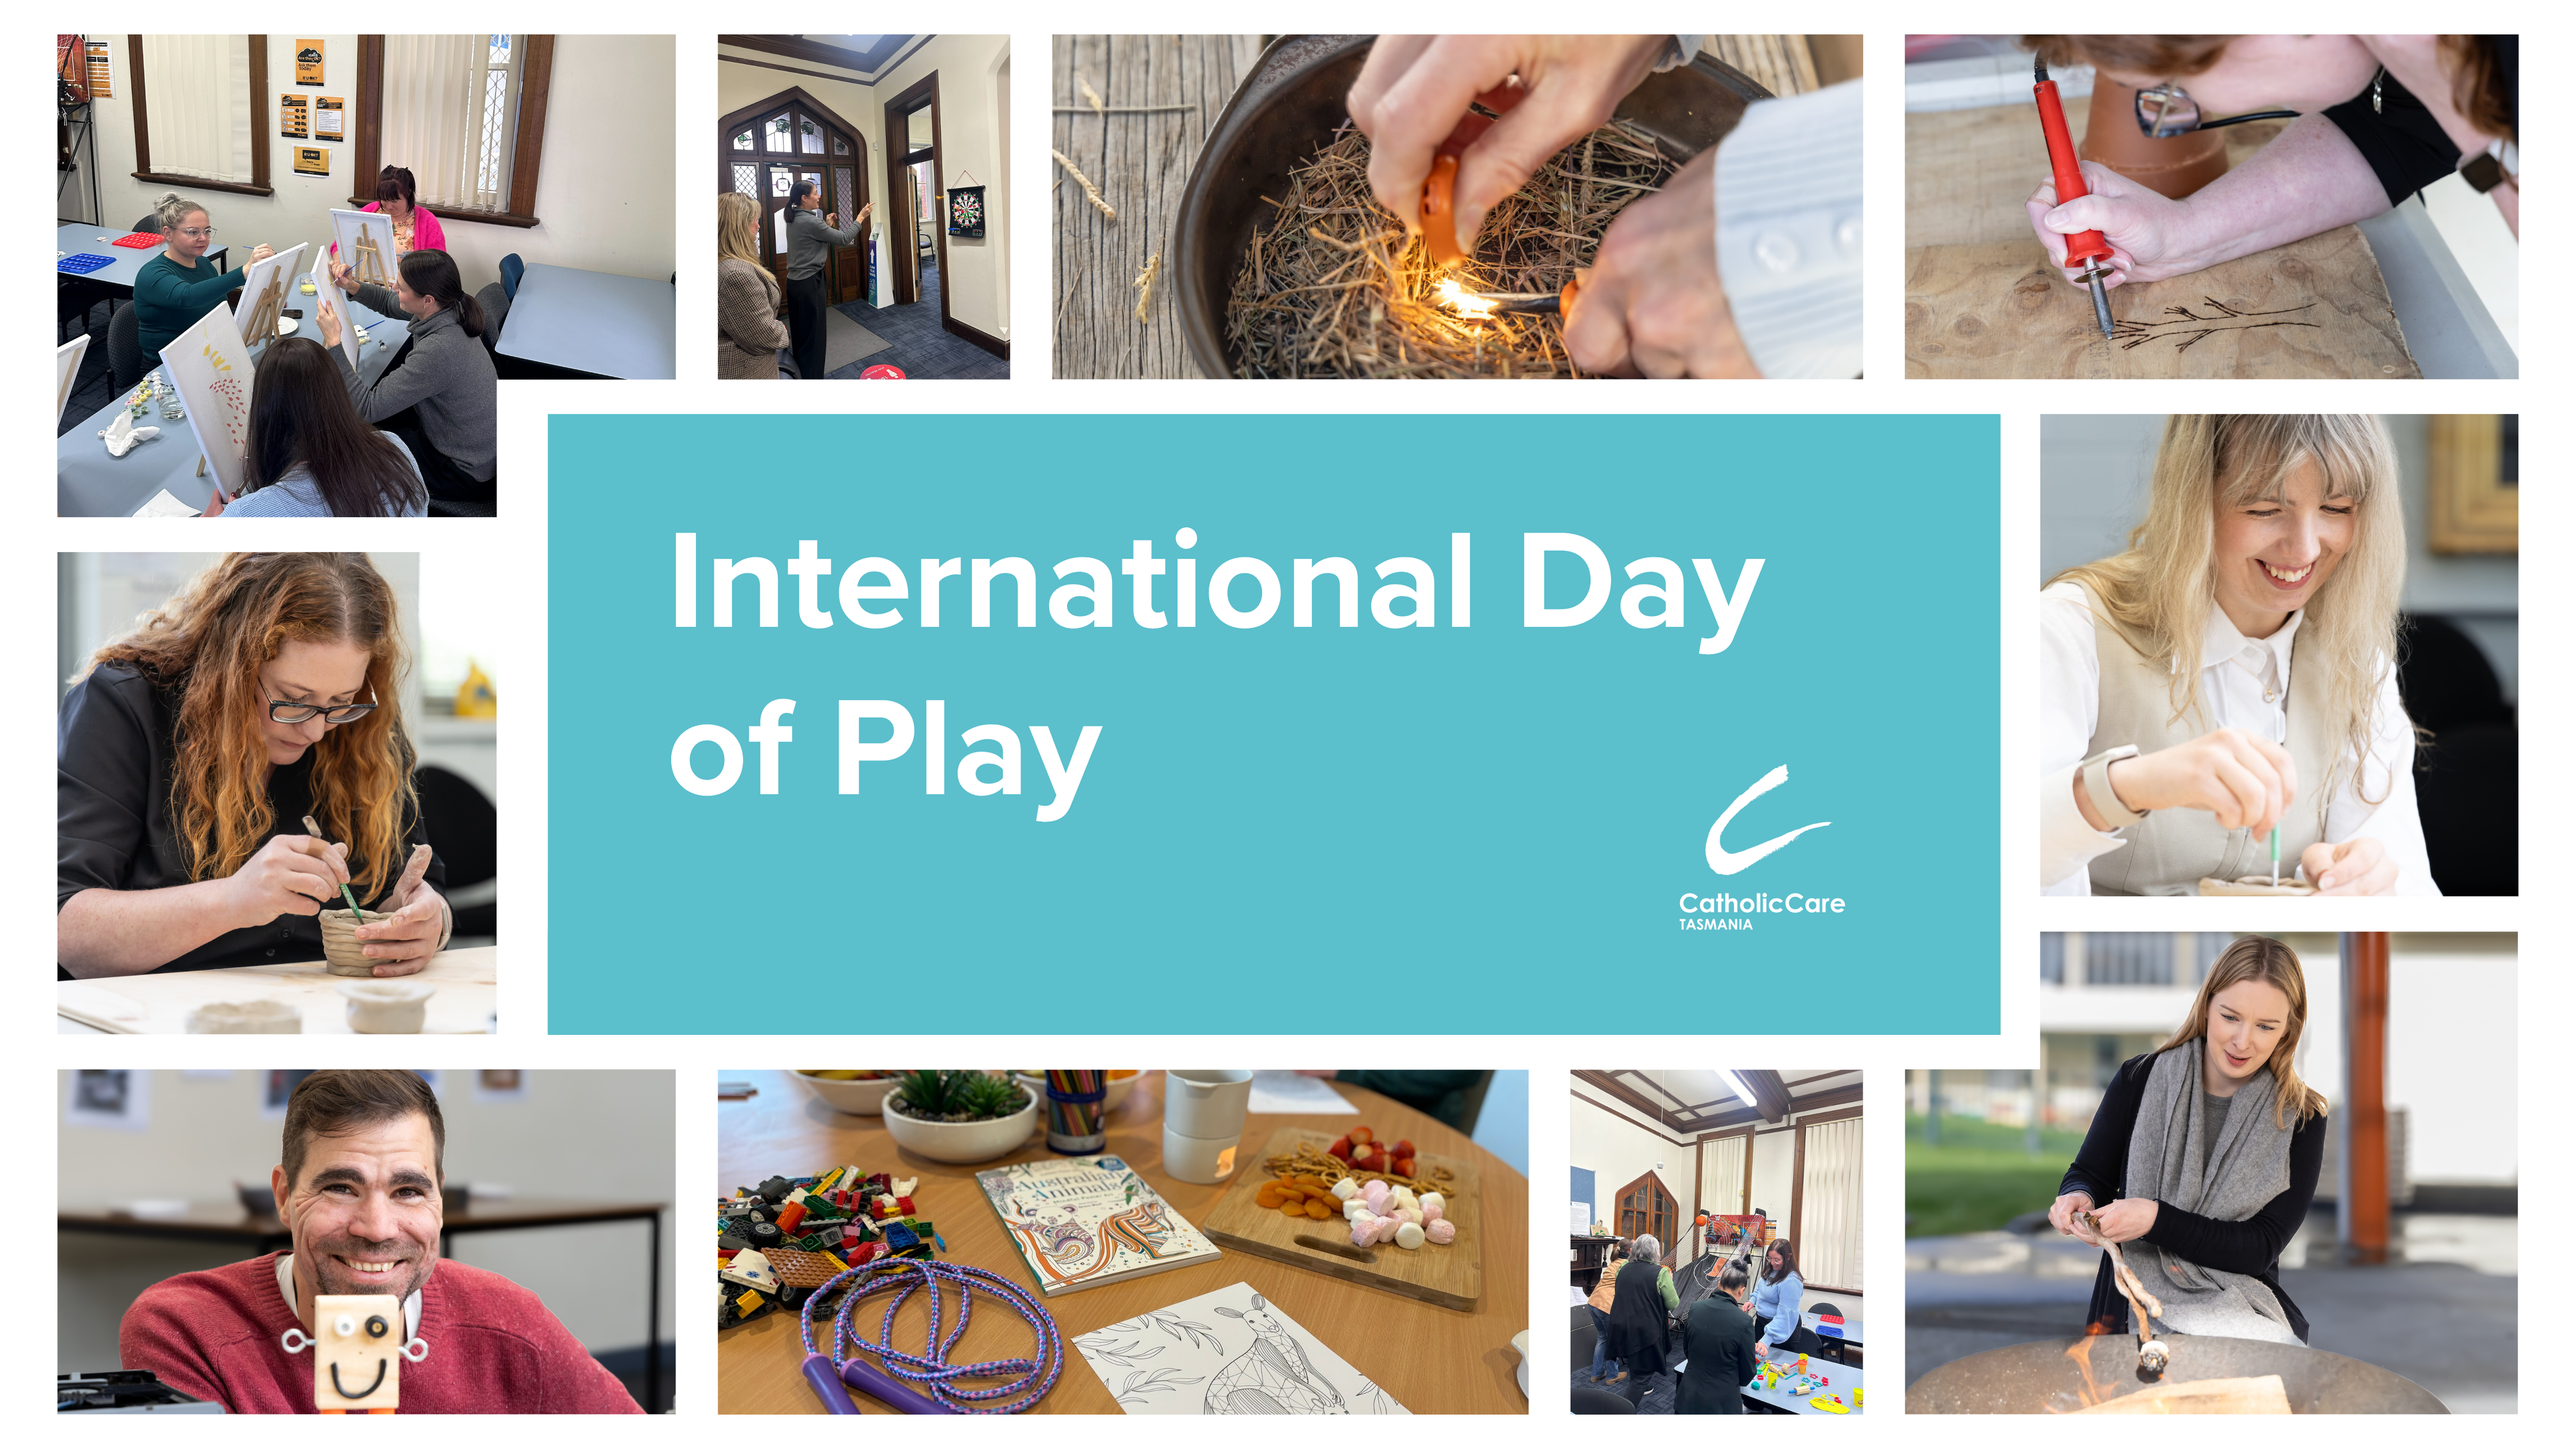 International Day of Play